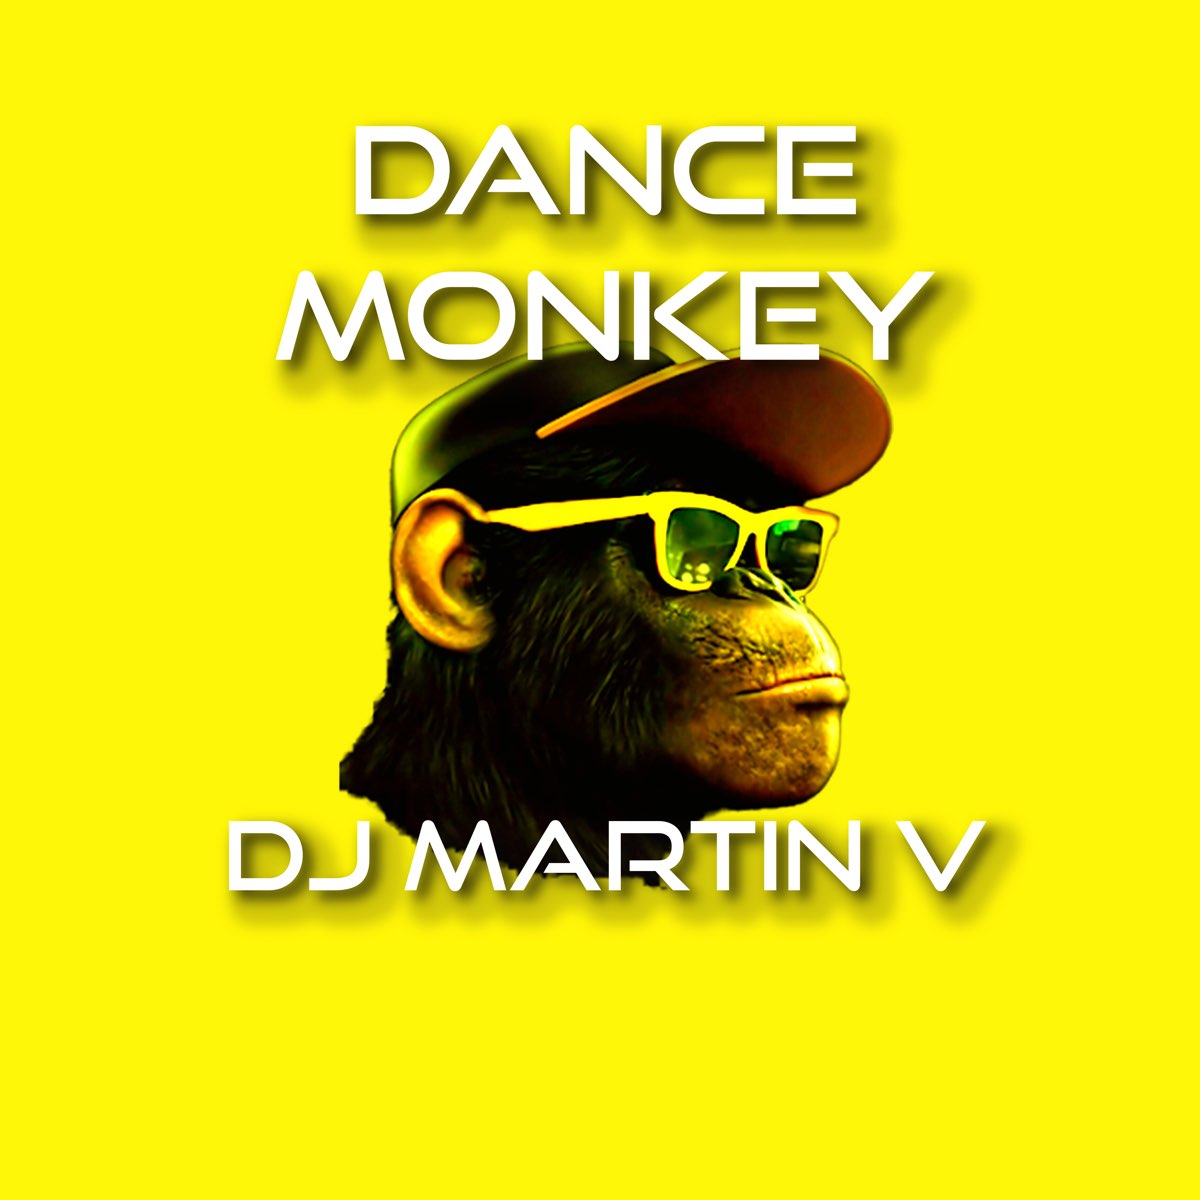 Dance Monkey. Песня Dance Monkey. Обезьяна диджей. Dance Monkey альбом. I can dance chimp